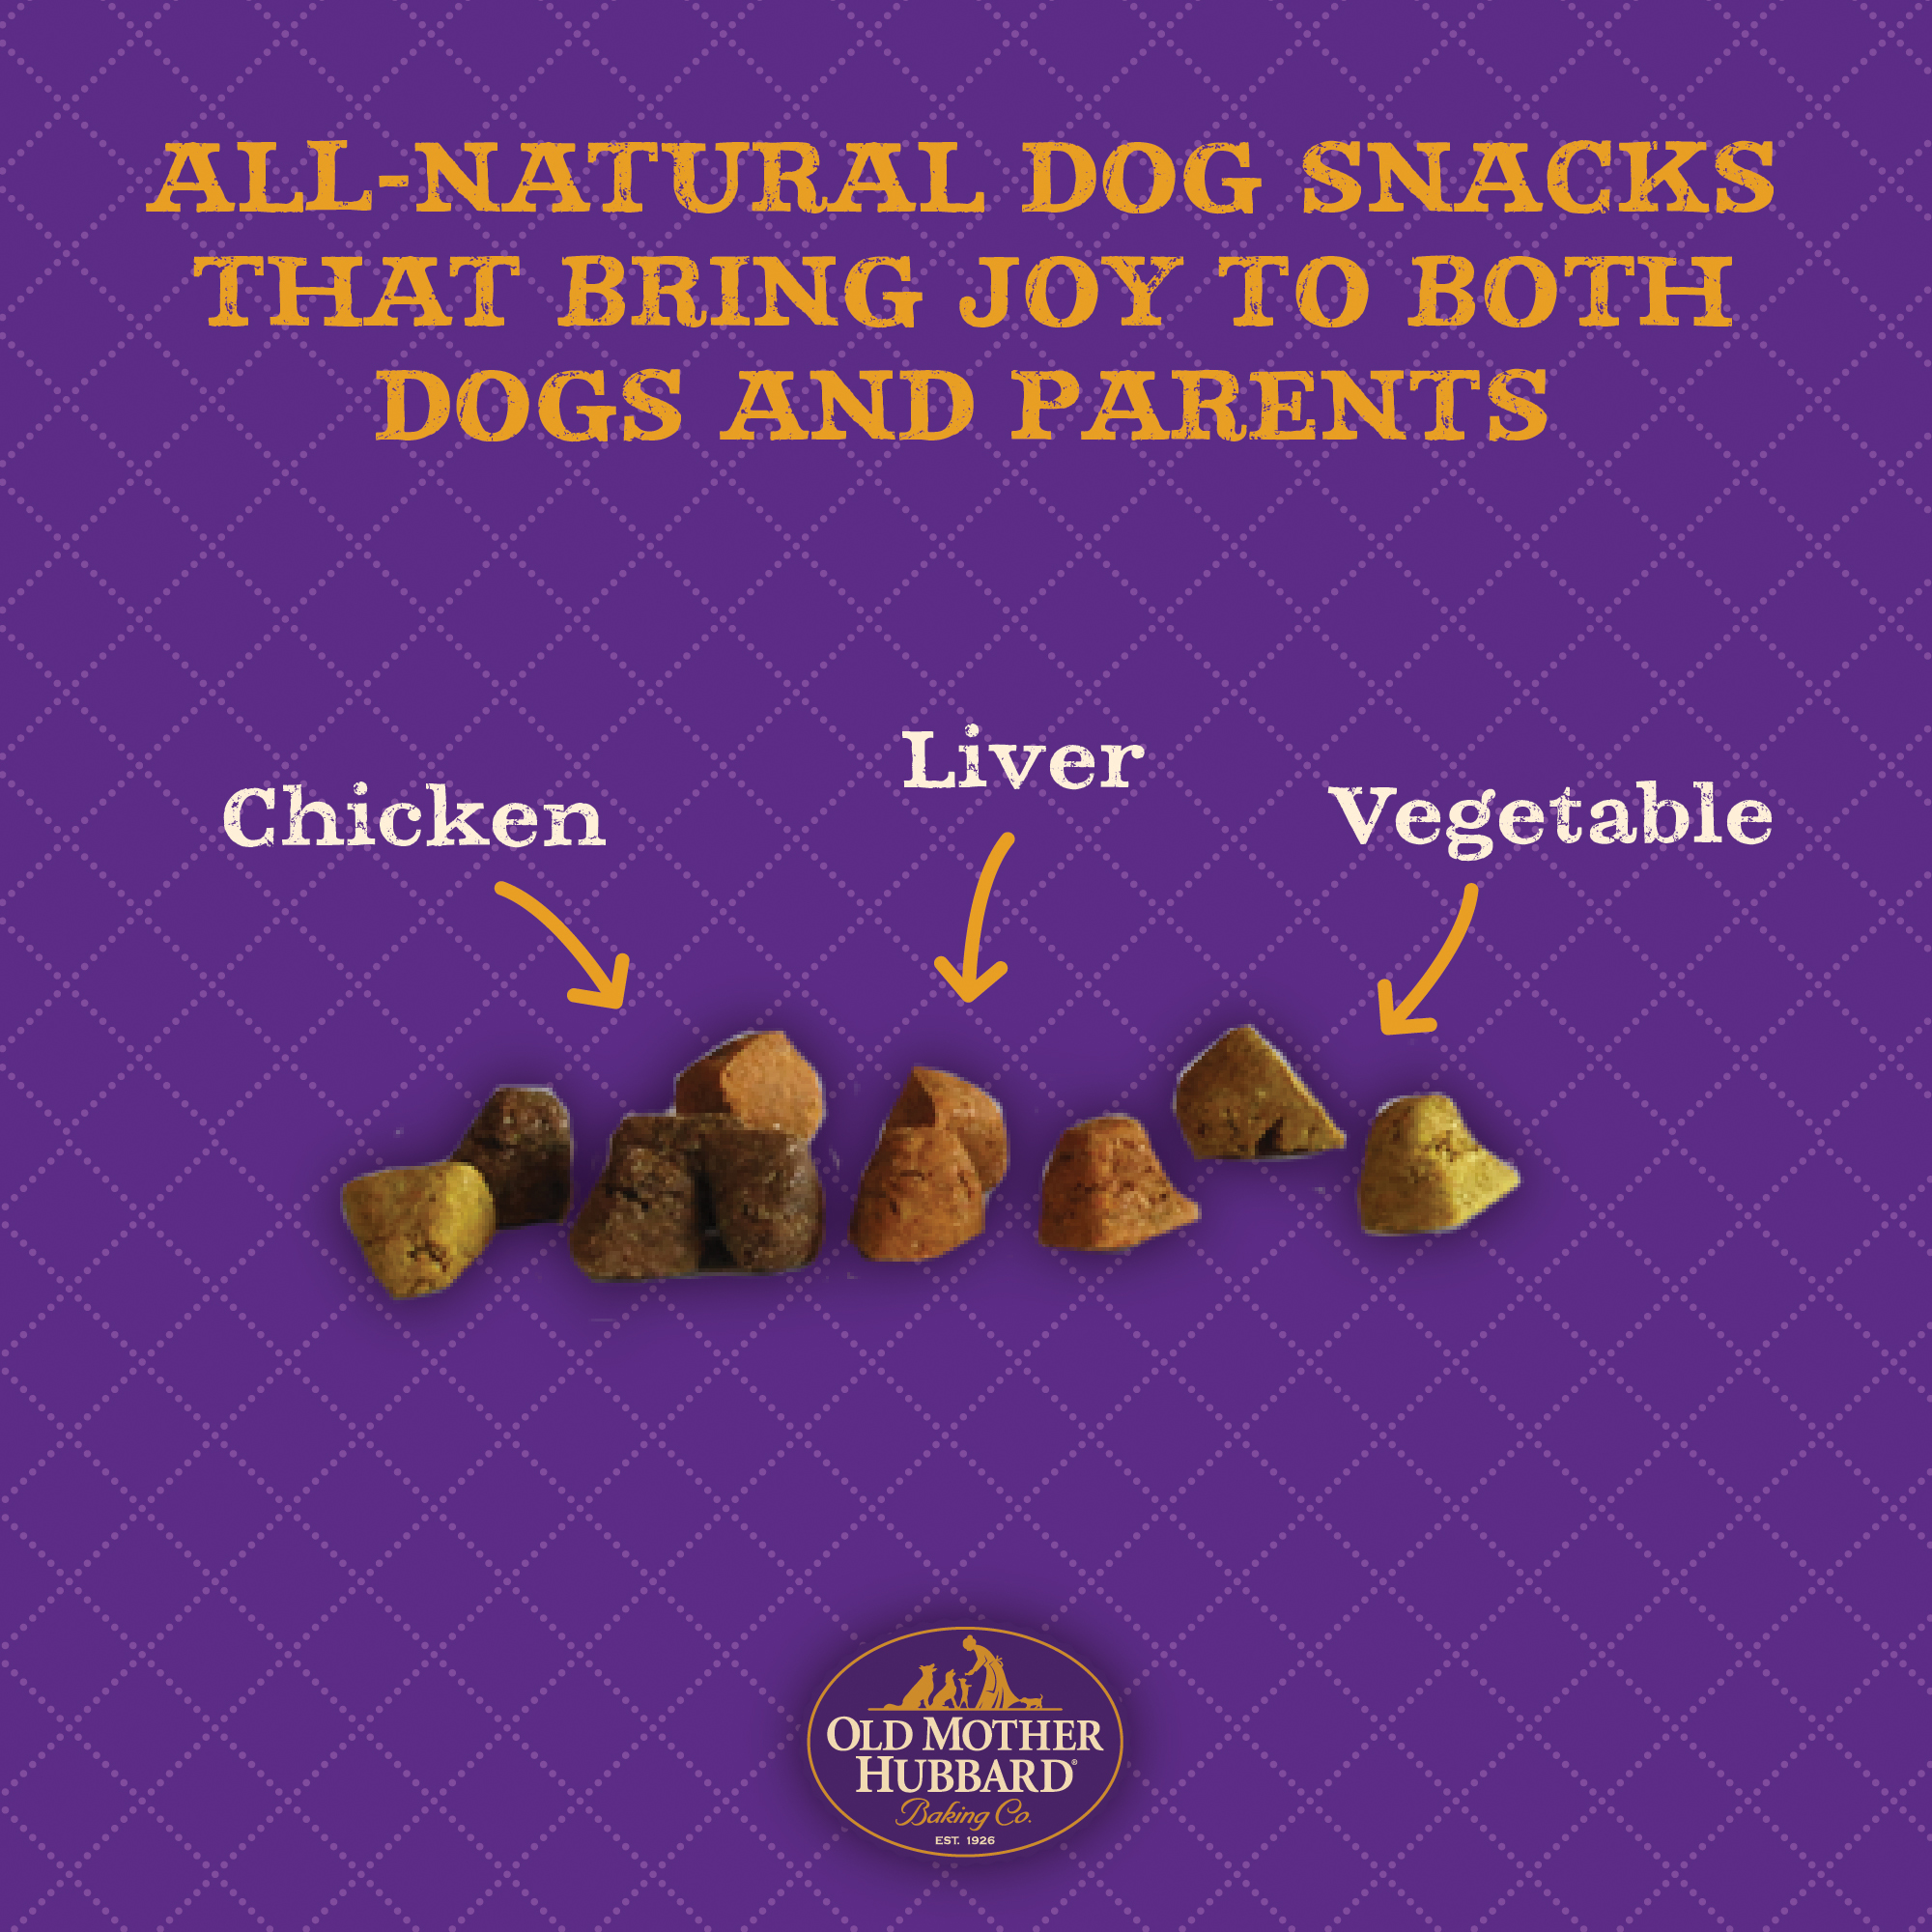 Old Mother Hubbard Bitz Natural Crunchy Dog Training Treats, Chicken, Liver & Veggies, 20-Pound Box - image 2 of 7